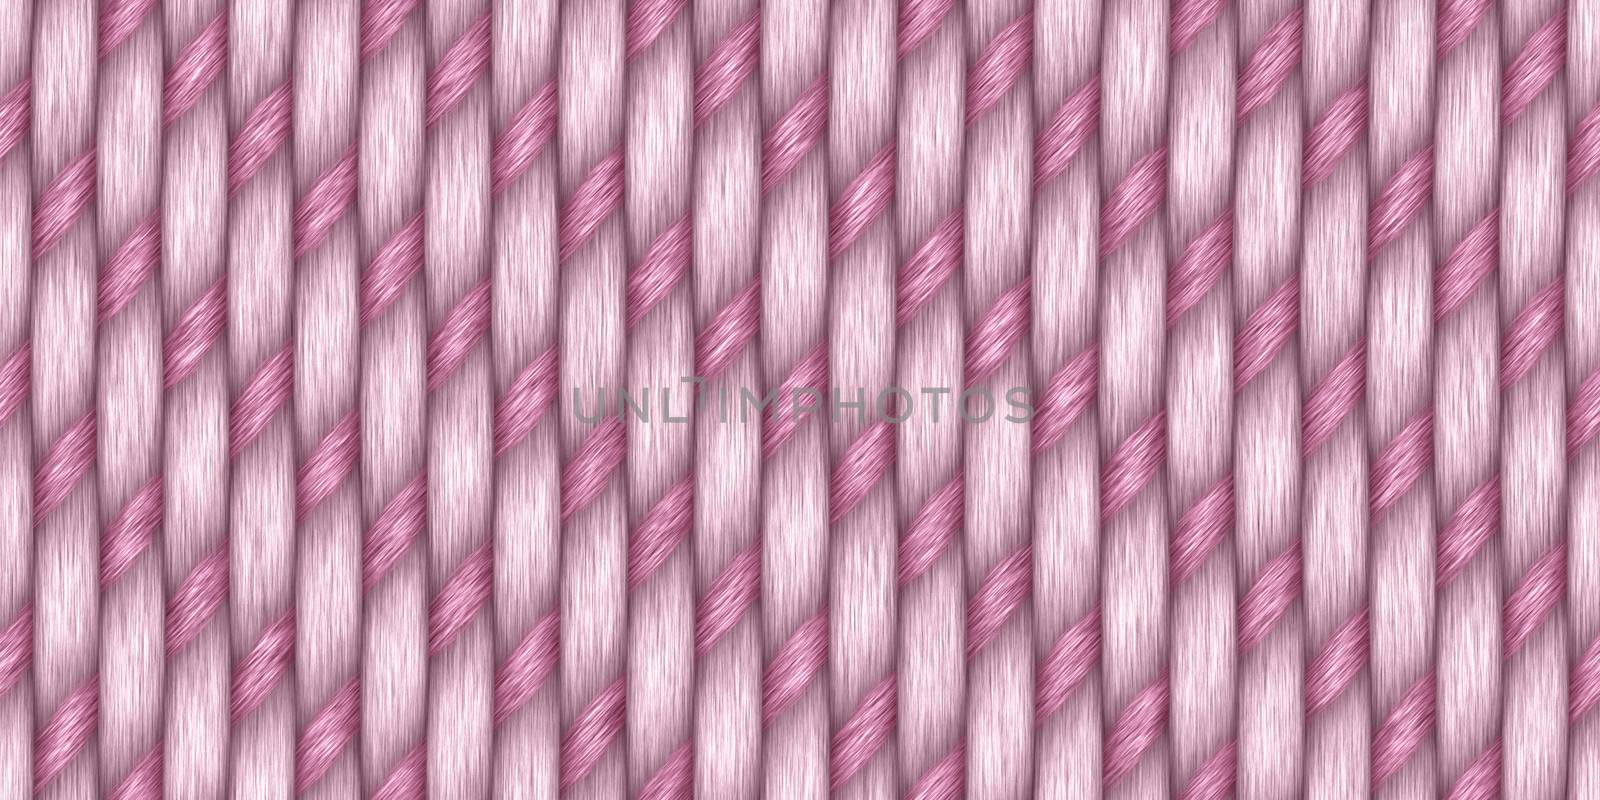 Pink Cross Weave Texture. Wicker Rattan Background Surface. 3D Rendering. 3D Illustration.